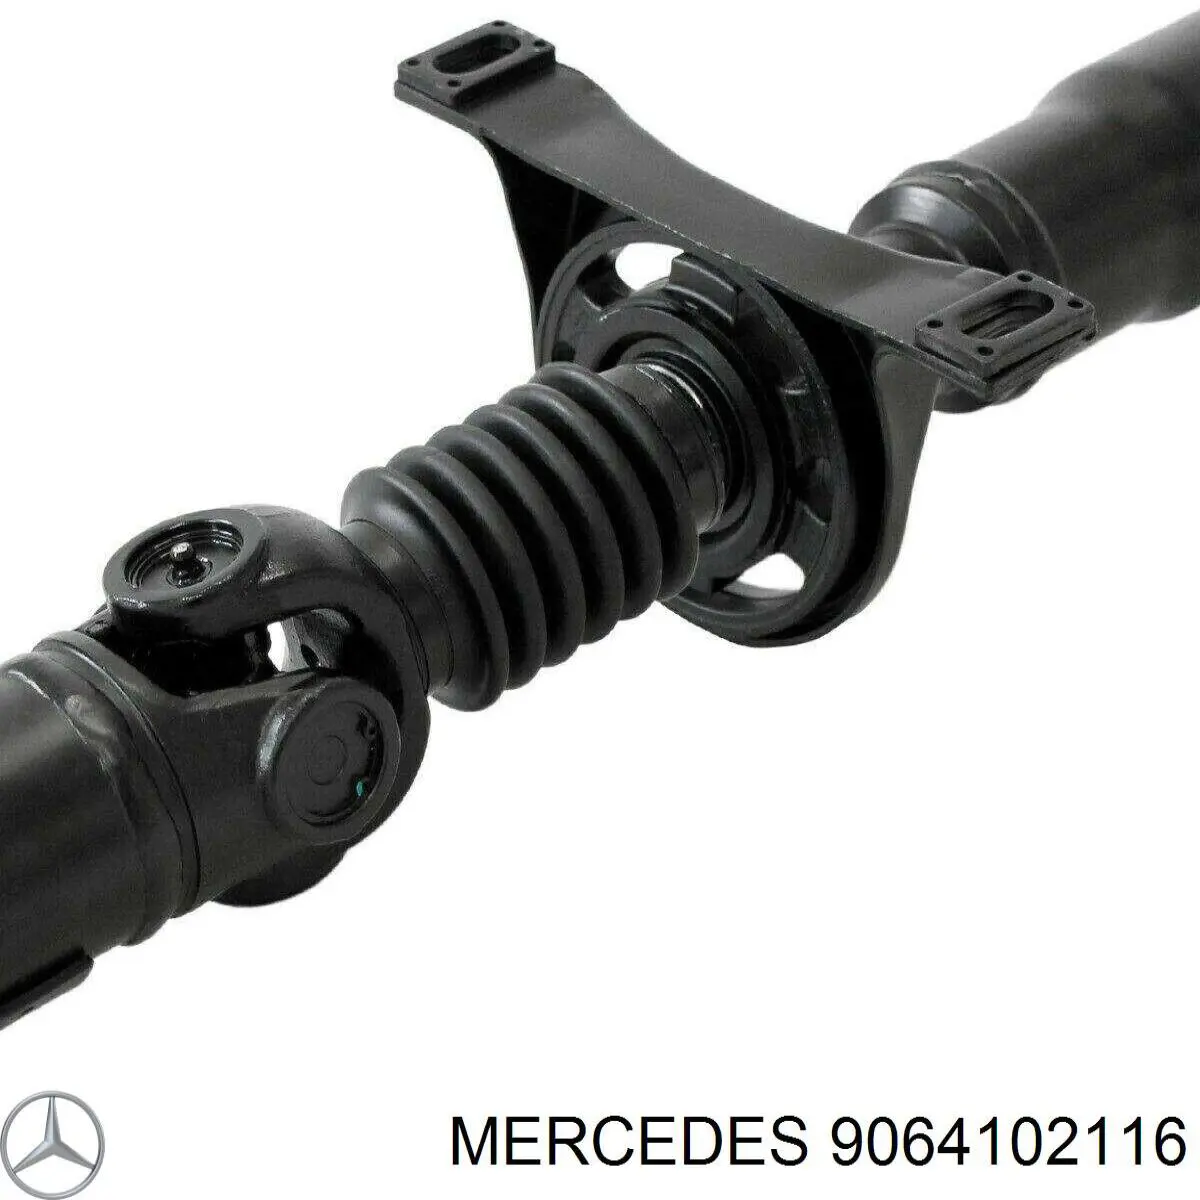 9064102116 Mercedes junta universal traseira montada